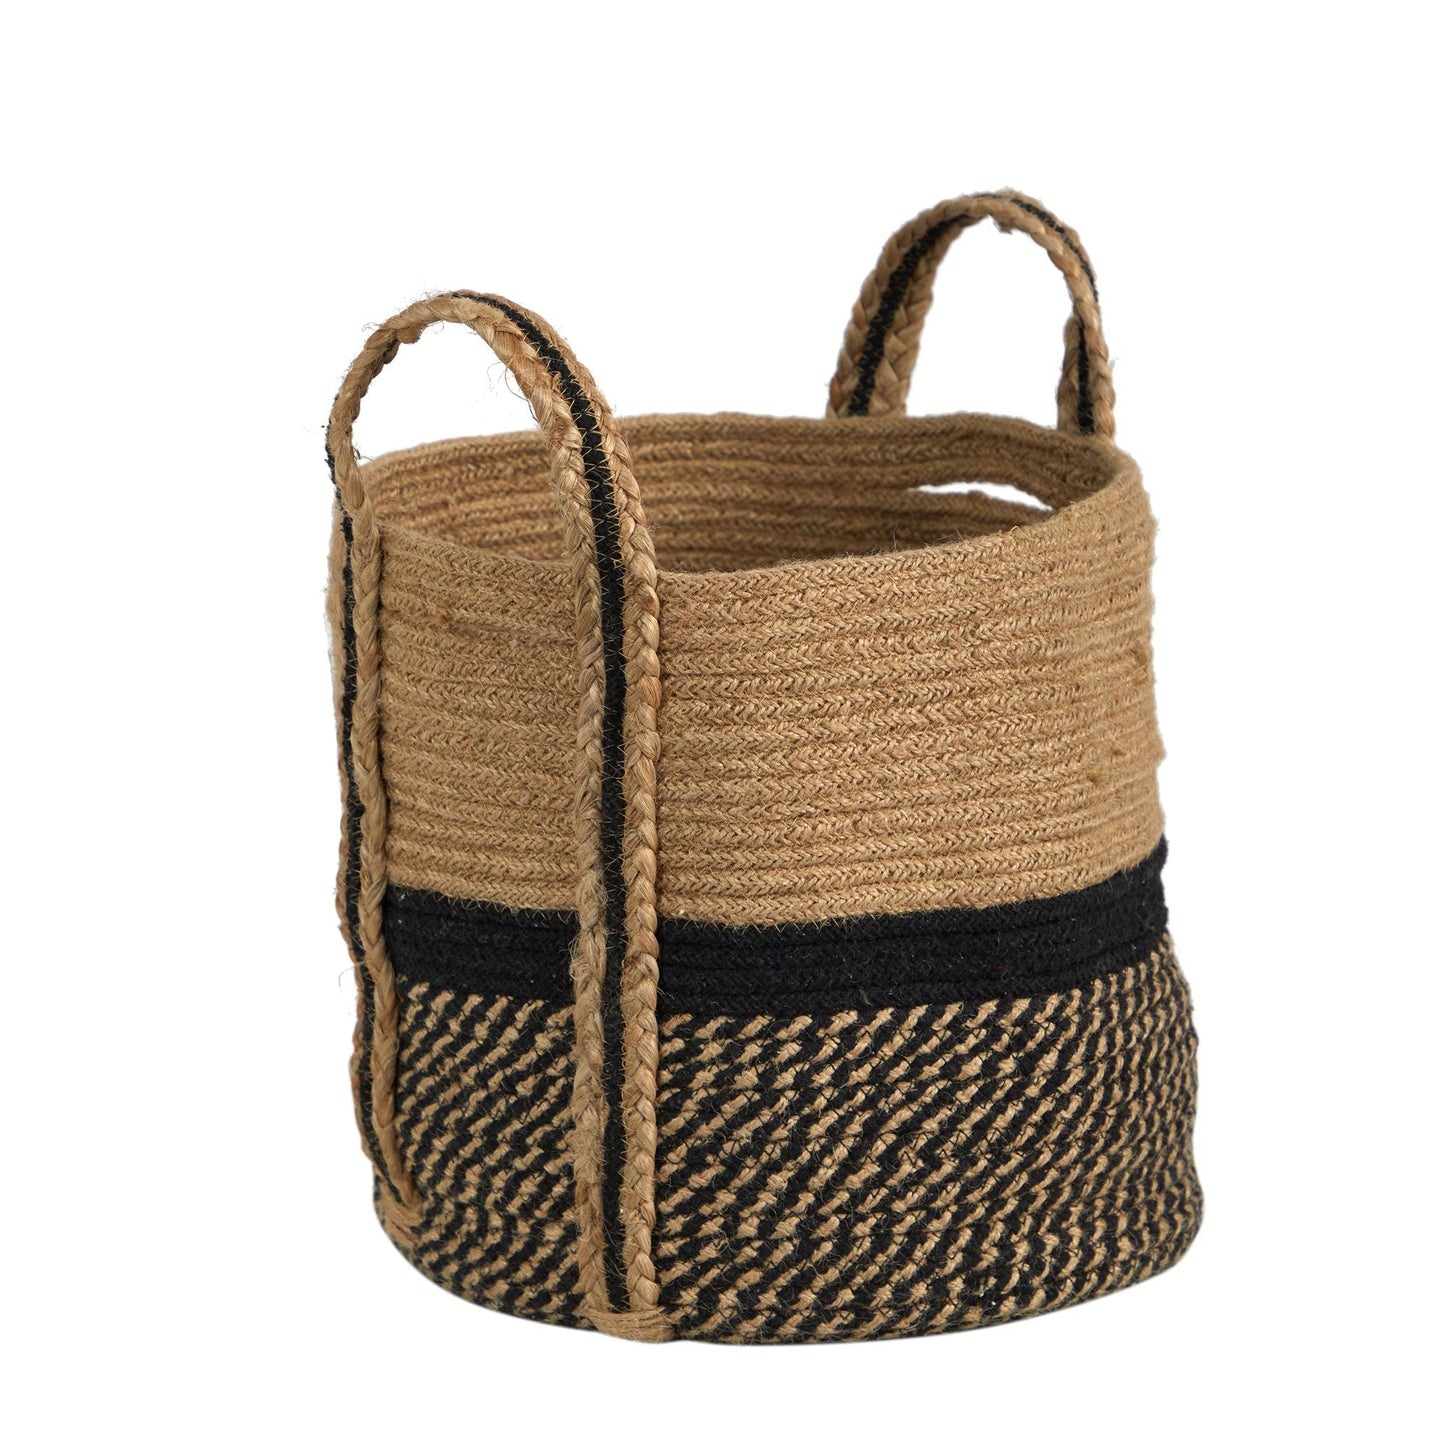 13" Boho Chic Basket Natural Jute Basket Planter, Black Bottom Natural Top with Handles" by Nearly Natural